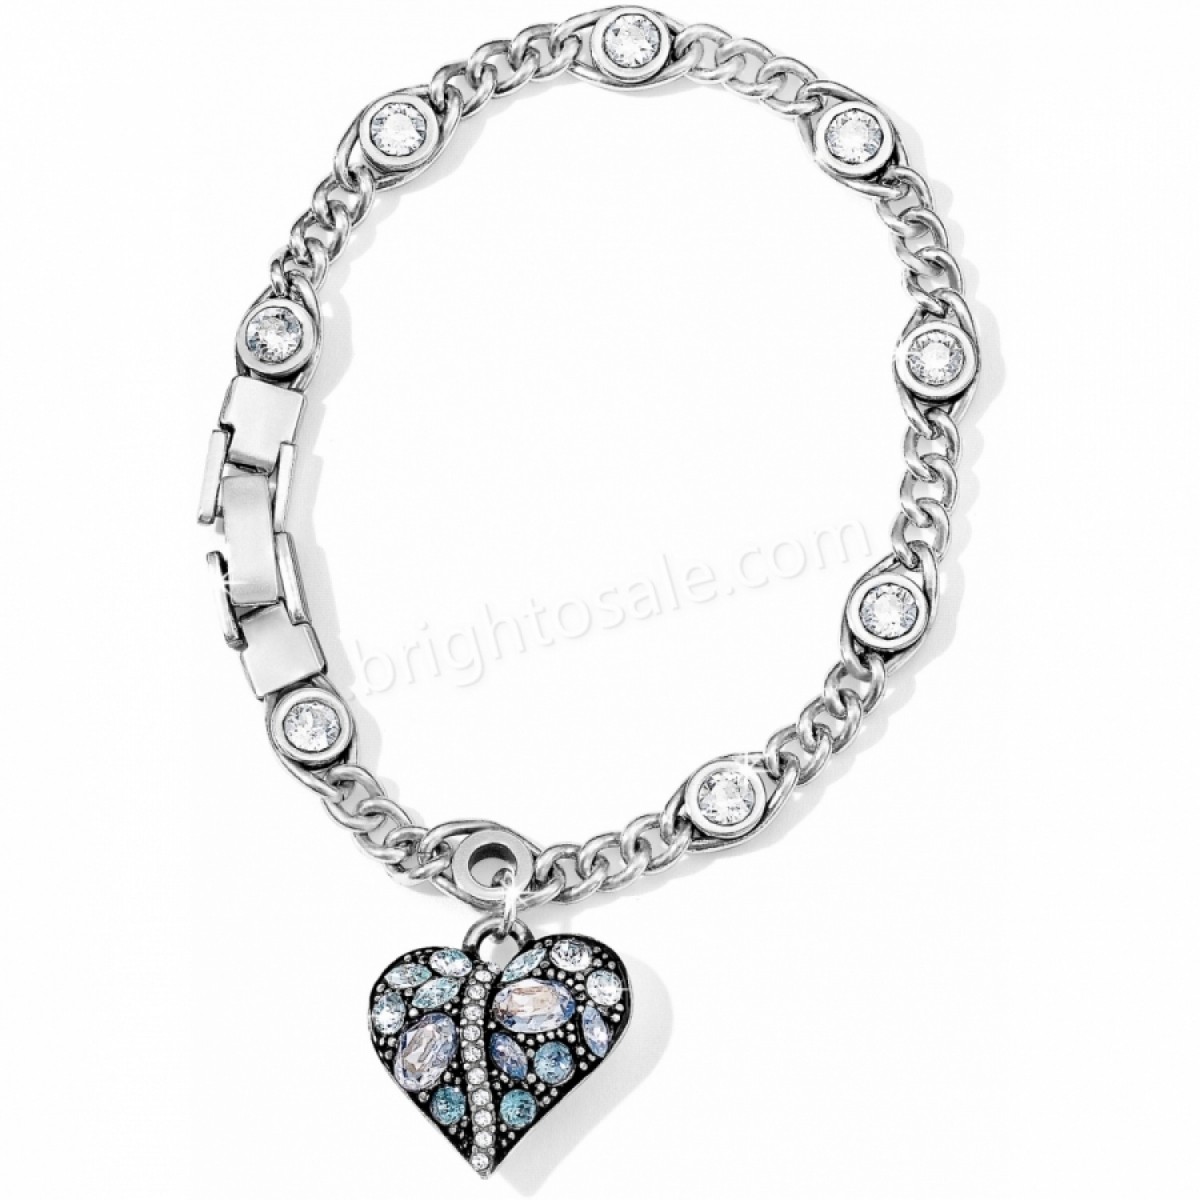 Brighton Collectibles & Online Discount Spectrum Petite Heart Bracelet Gift Set - -0